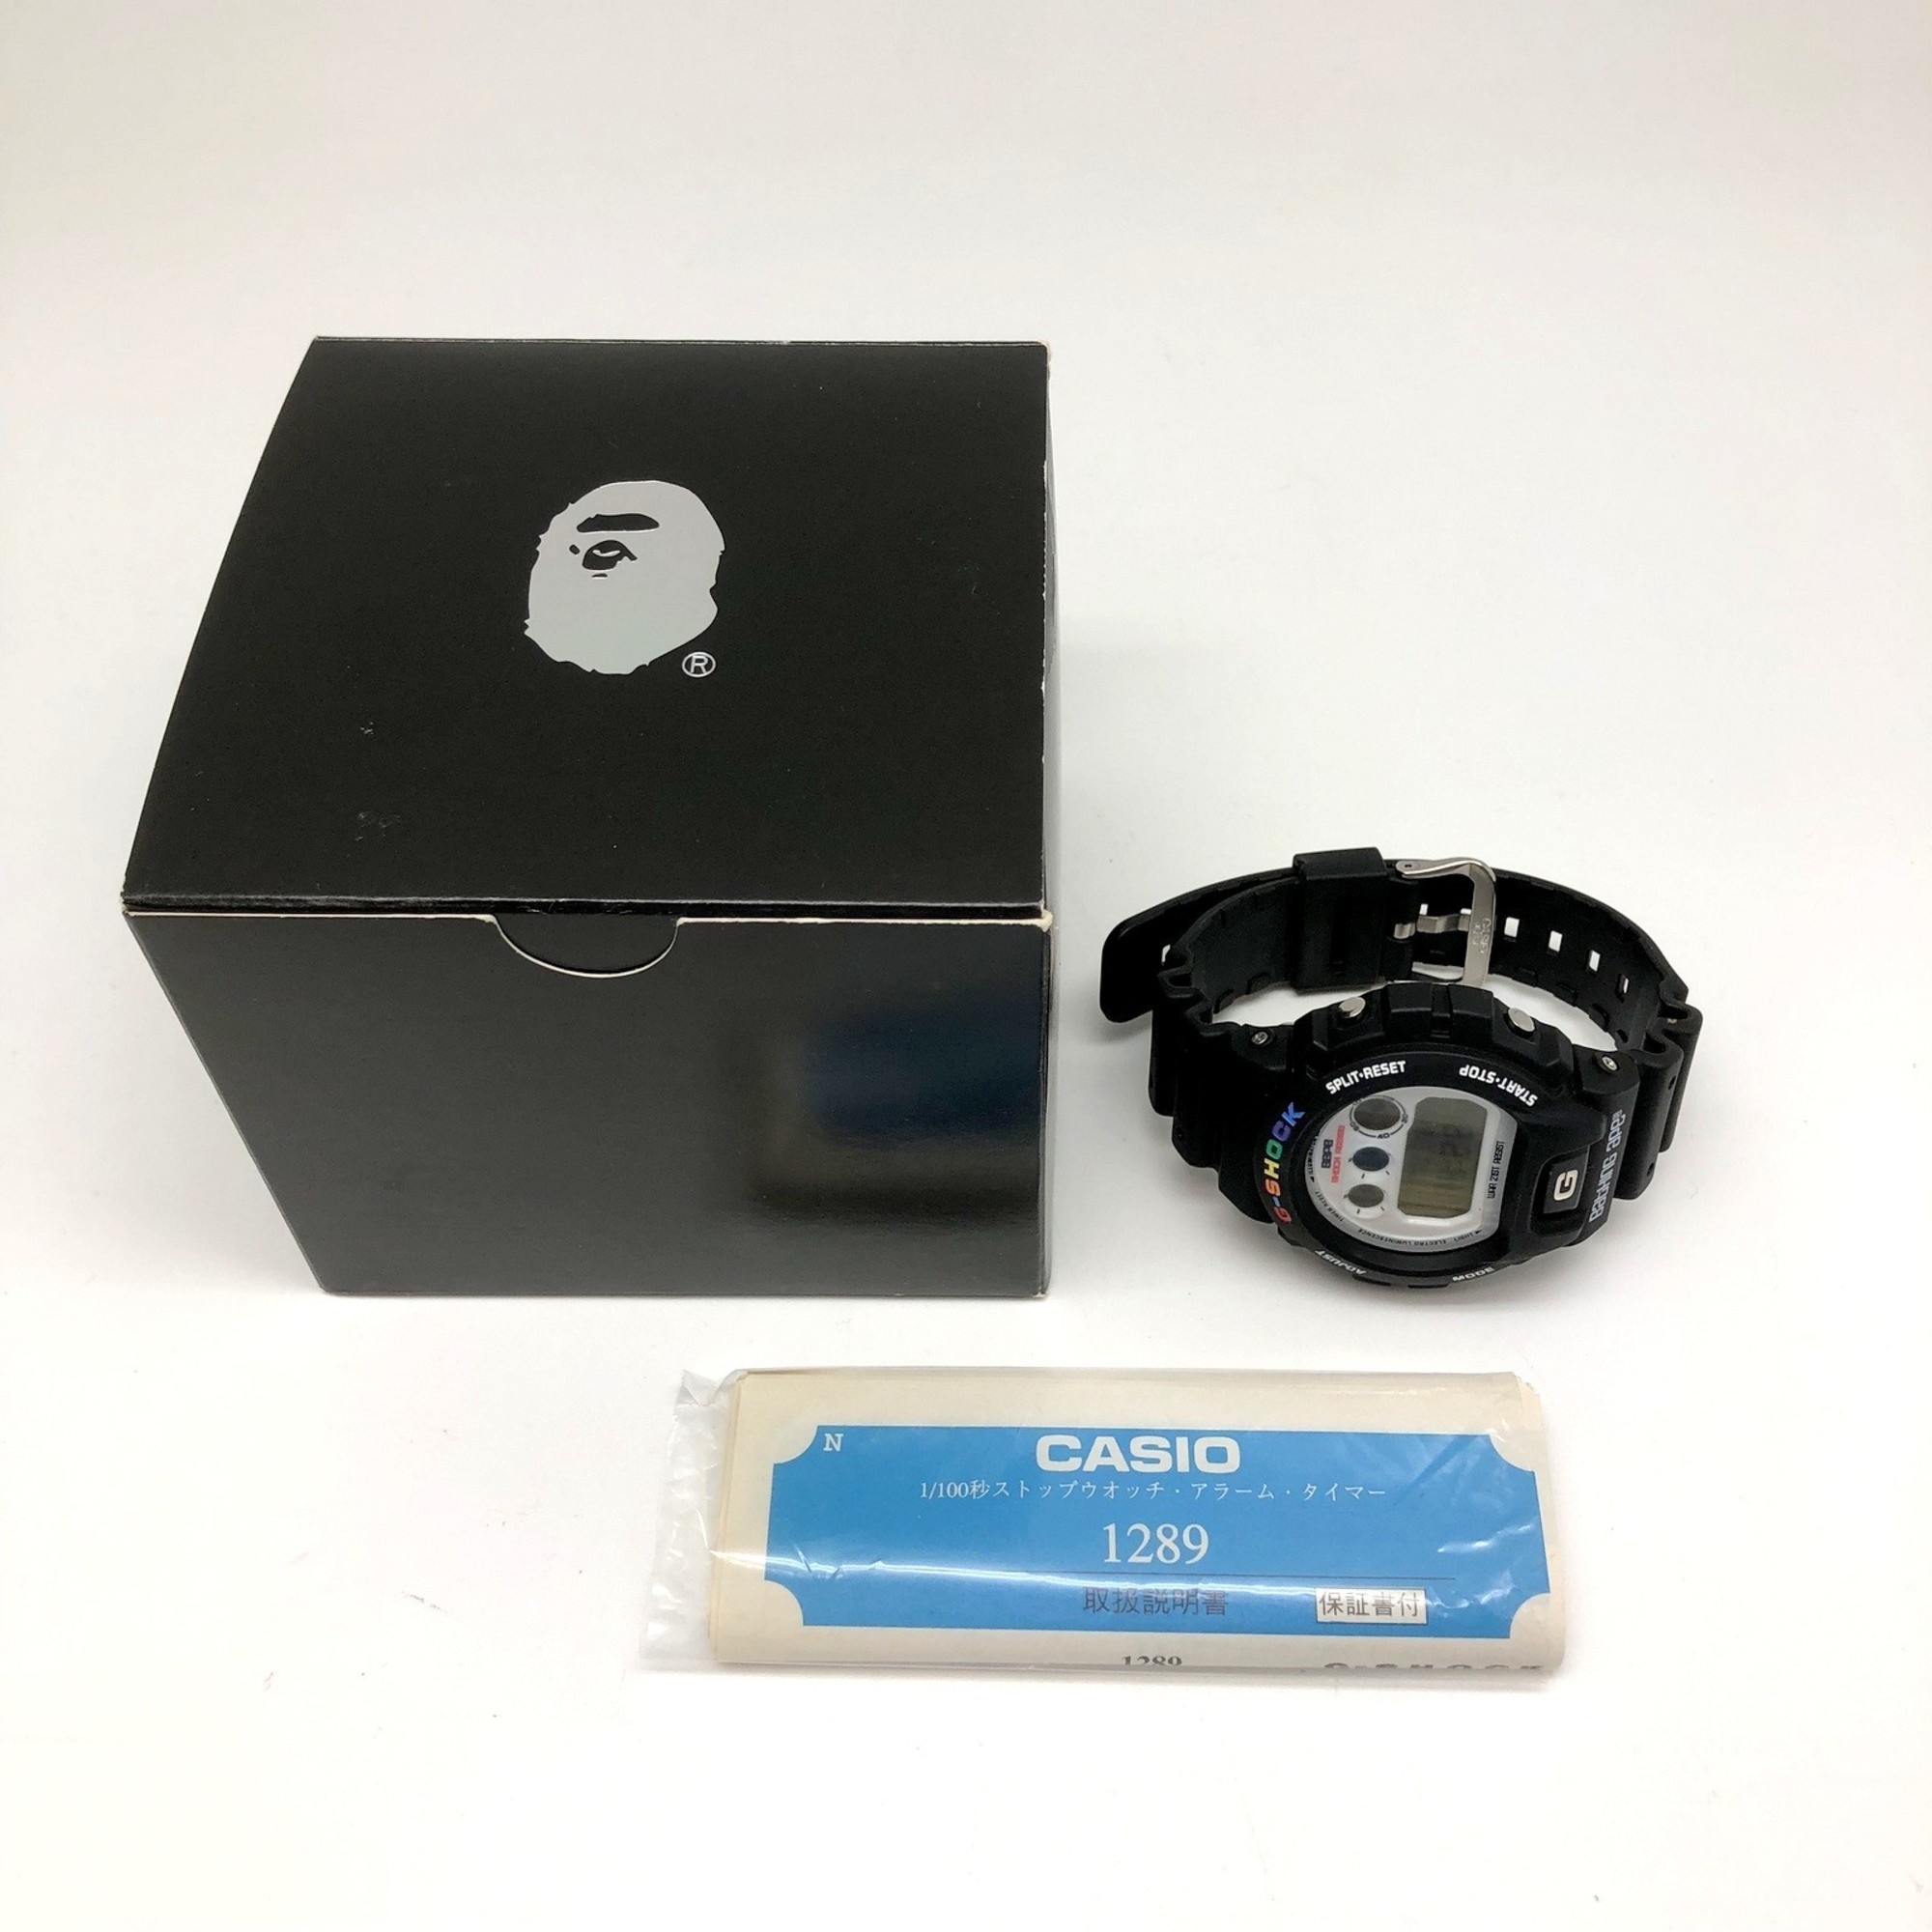 CASIO Casio G-SHOCK Watch DW-6900 Abathing Ape APE BAPE Bape Collaboration Double Name Third Eye Digital Quartz Black Multicolor Serial Limited to 1000 ITER606E5ERO